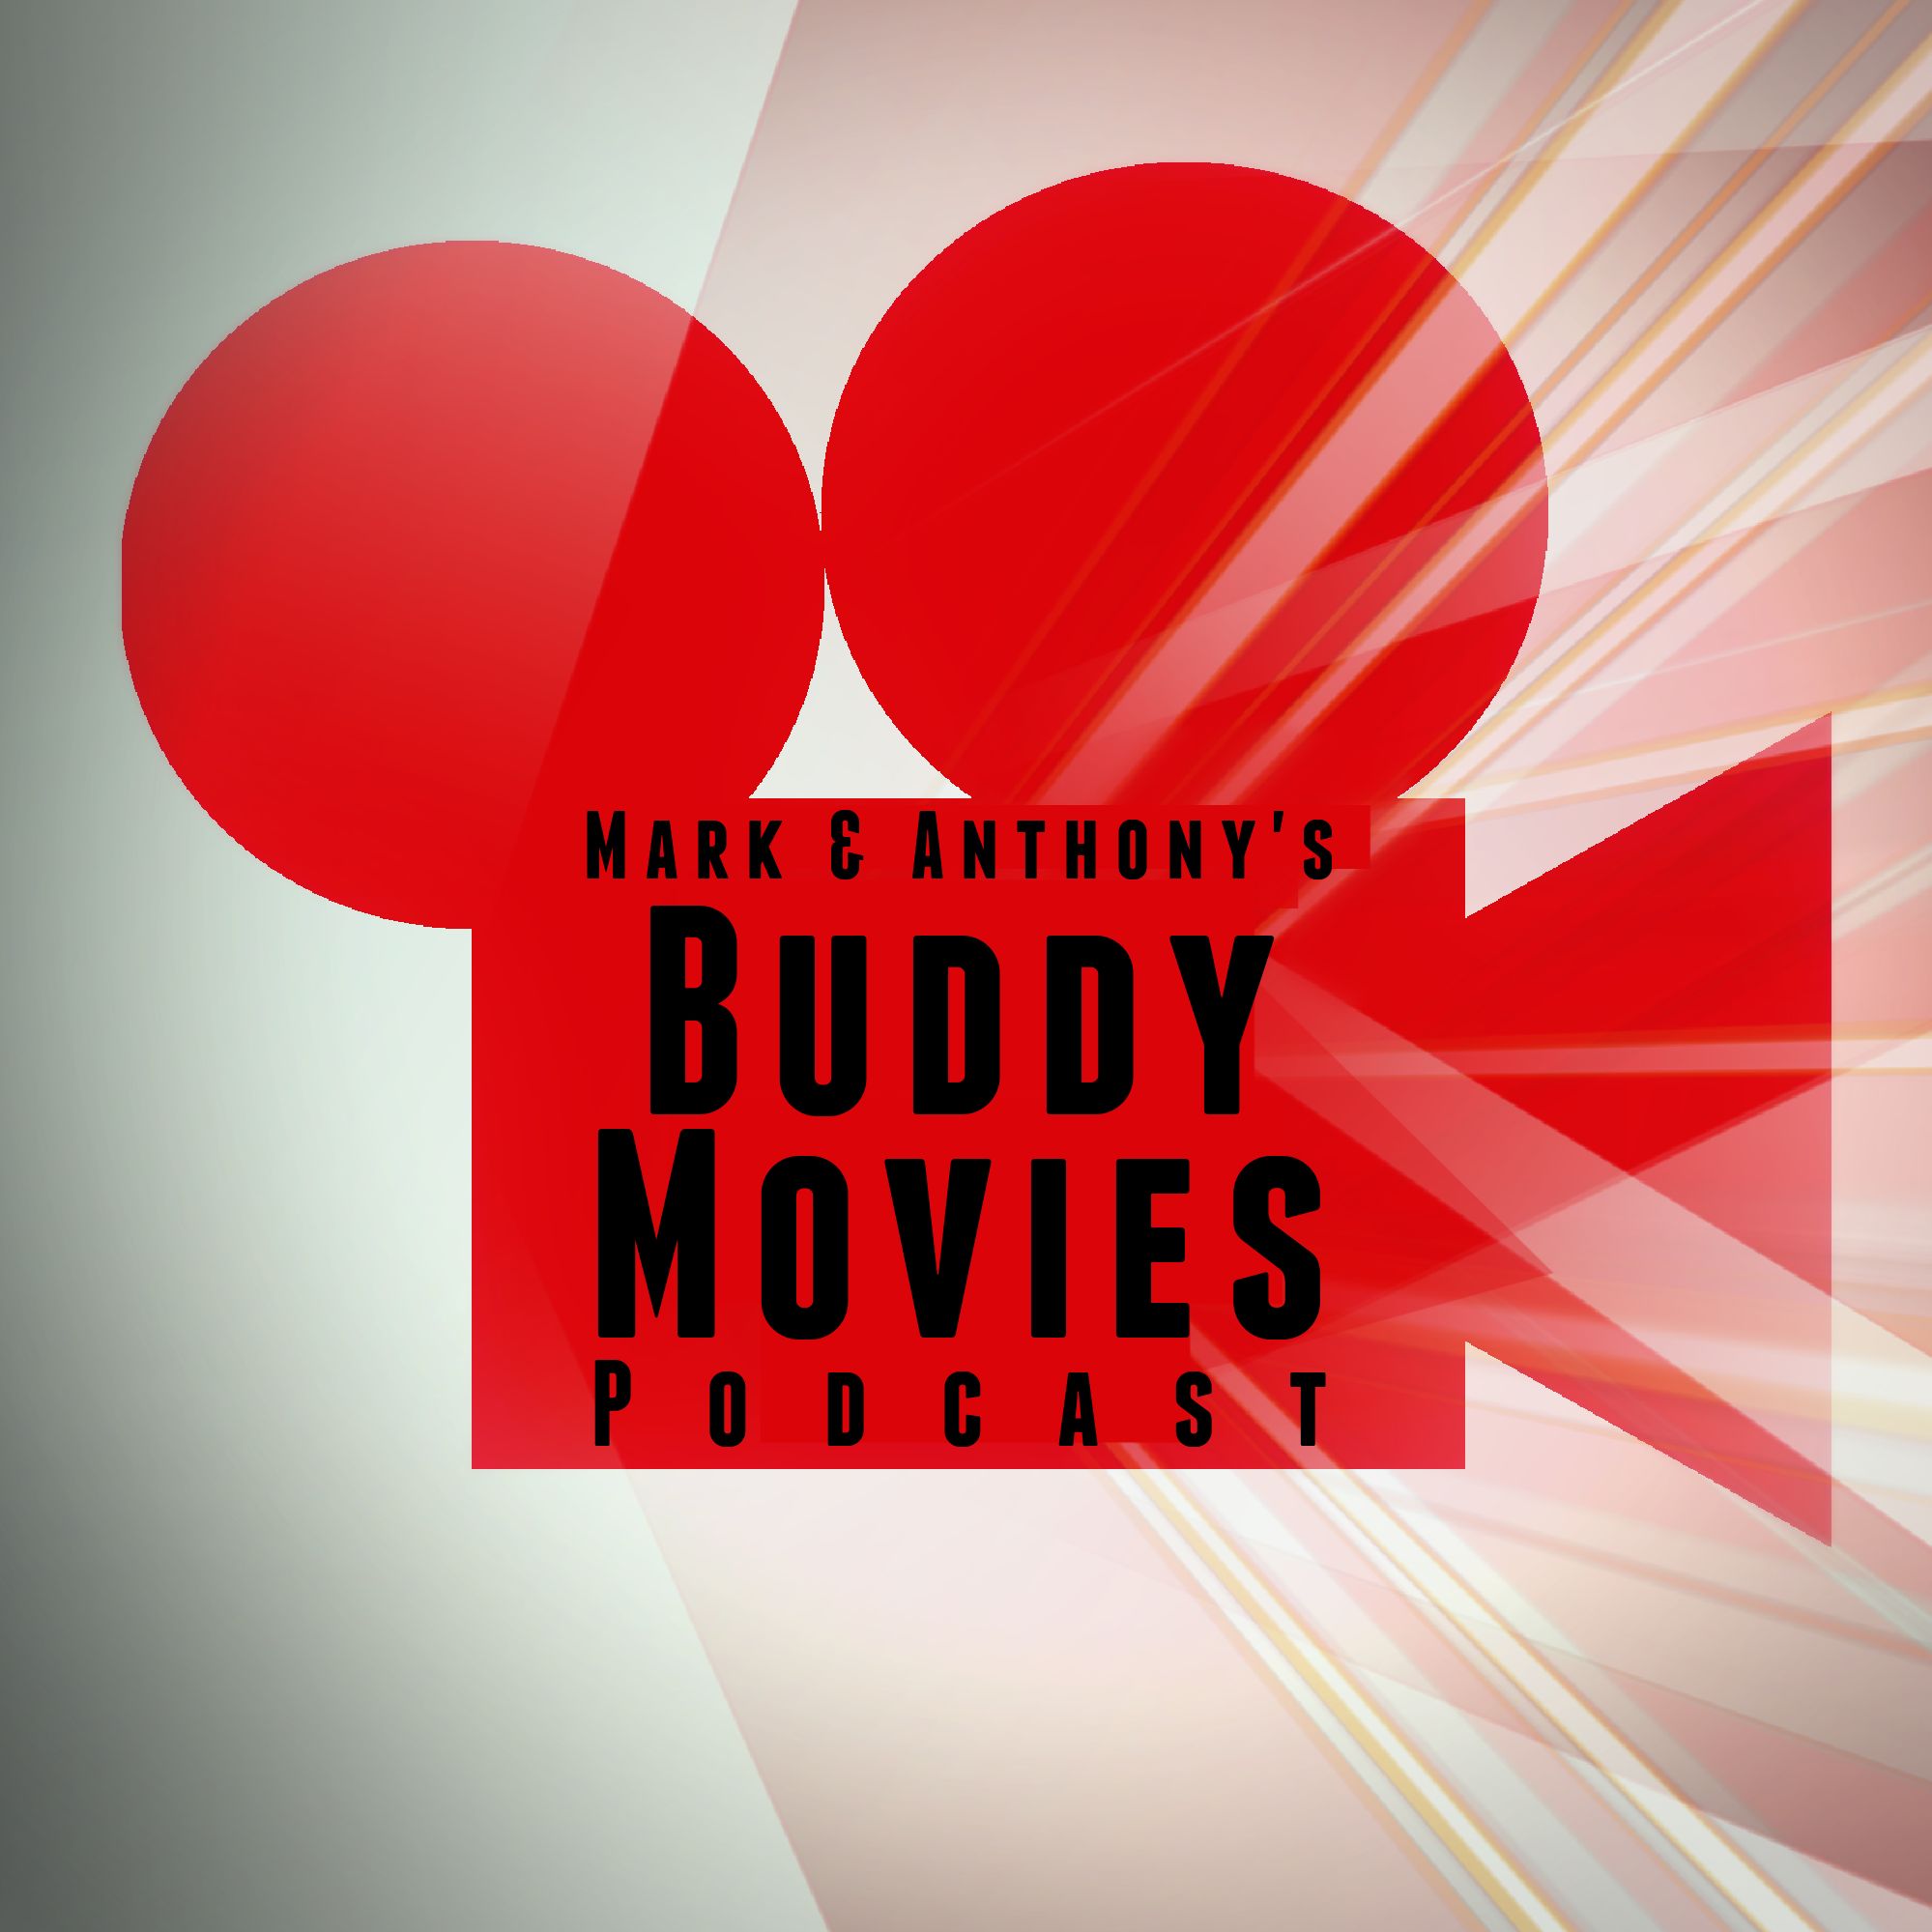 Buddy Movies